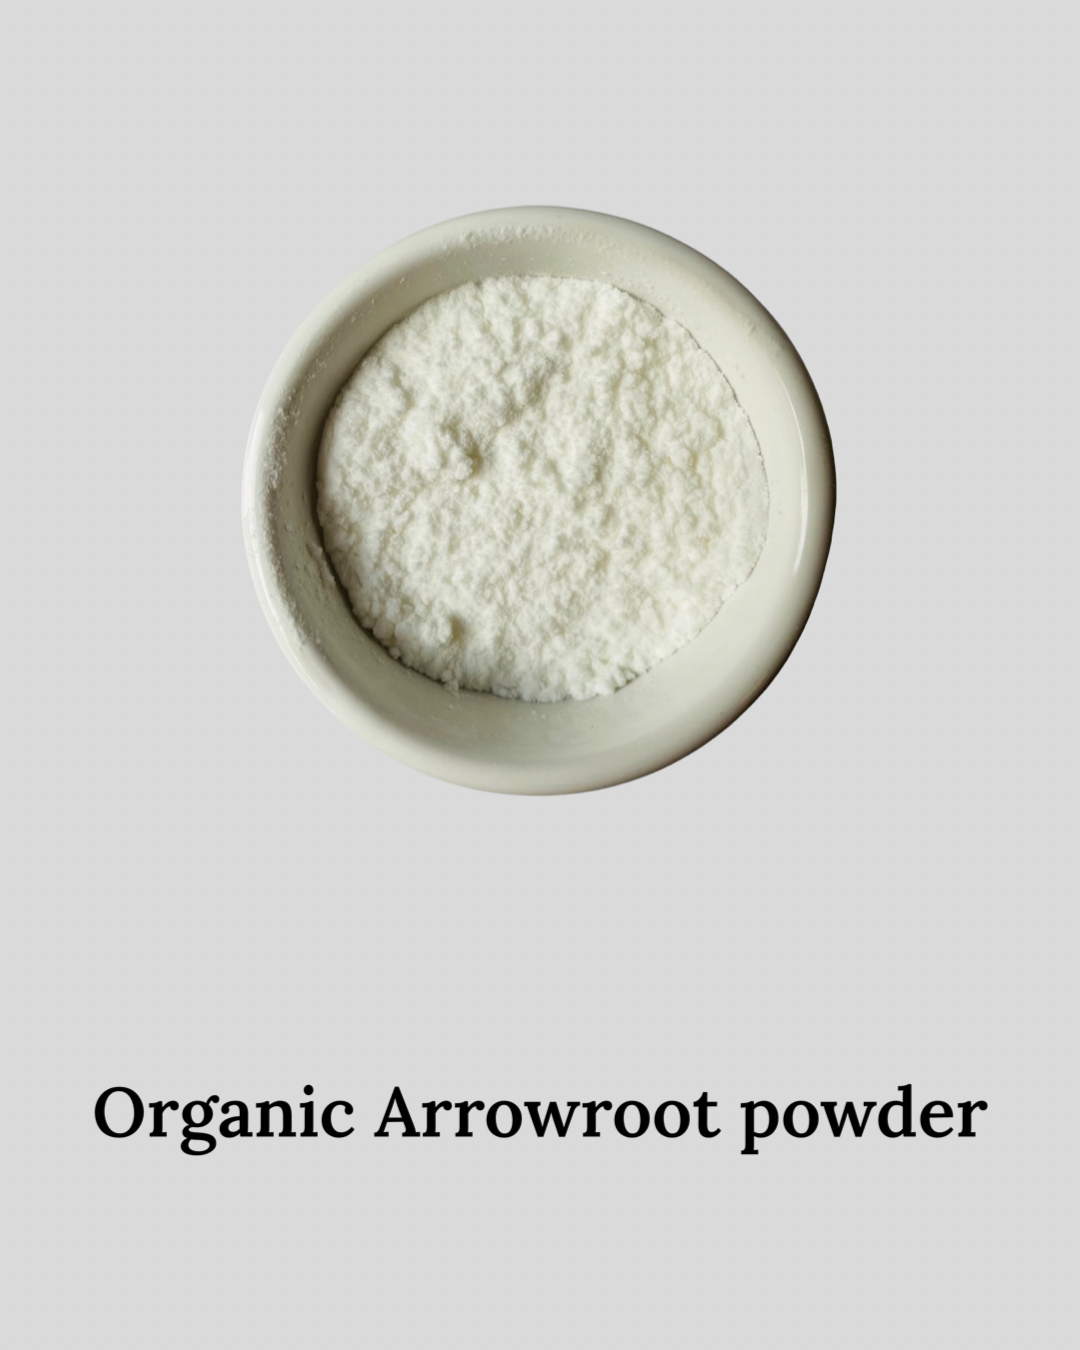 Organic Arrowroot powder